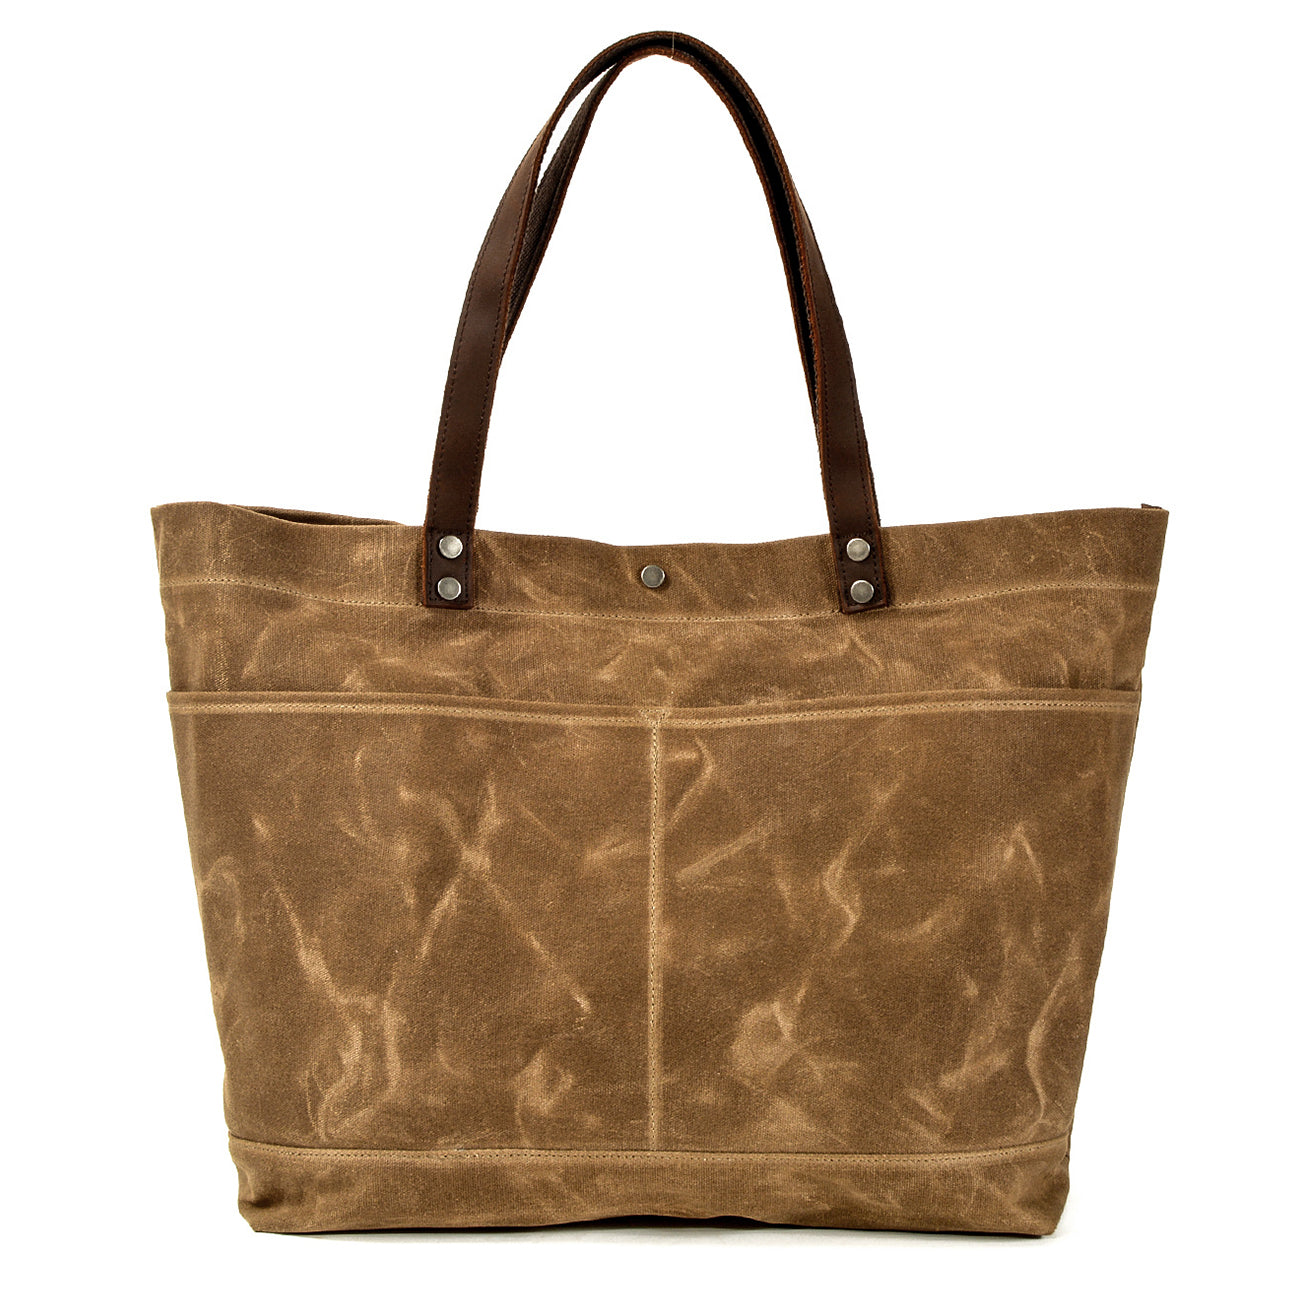 Buy the Latest Types of Crossbody Bags - Arad Branding